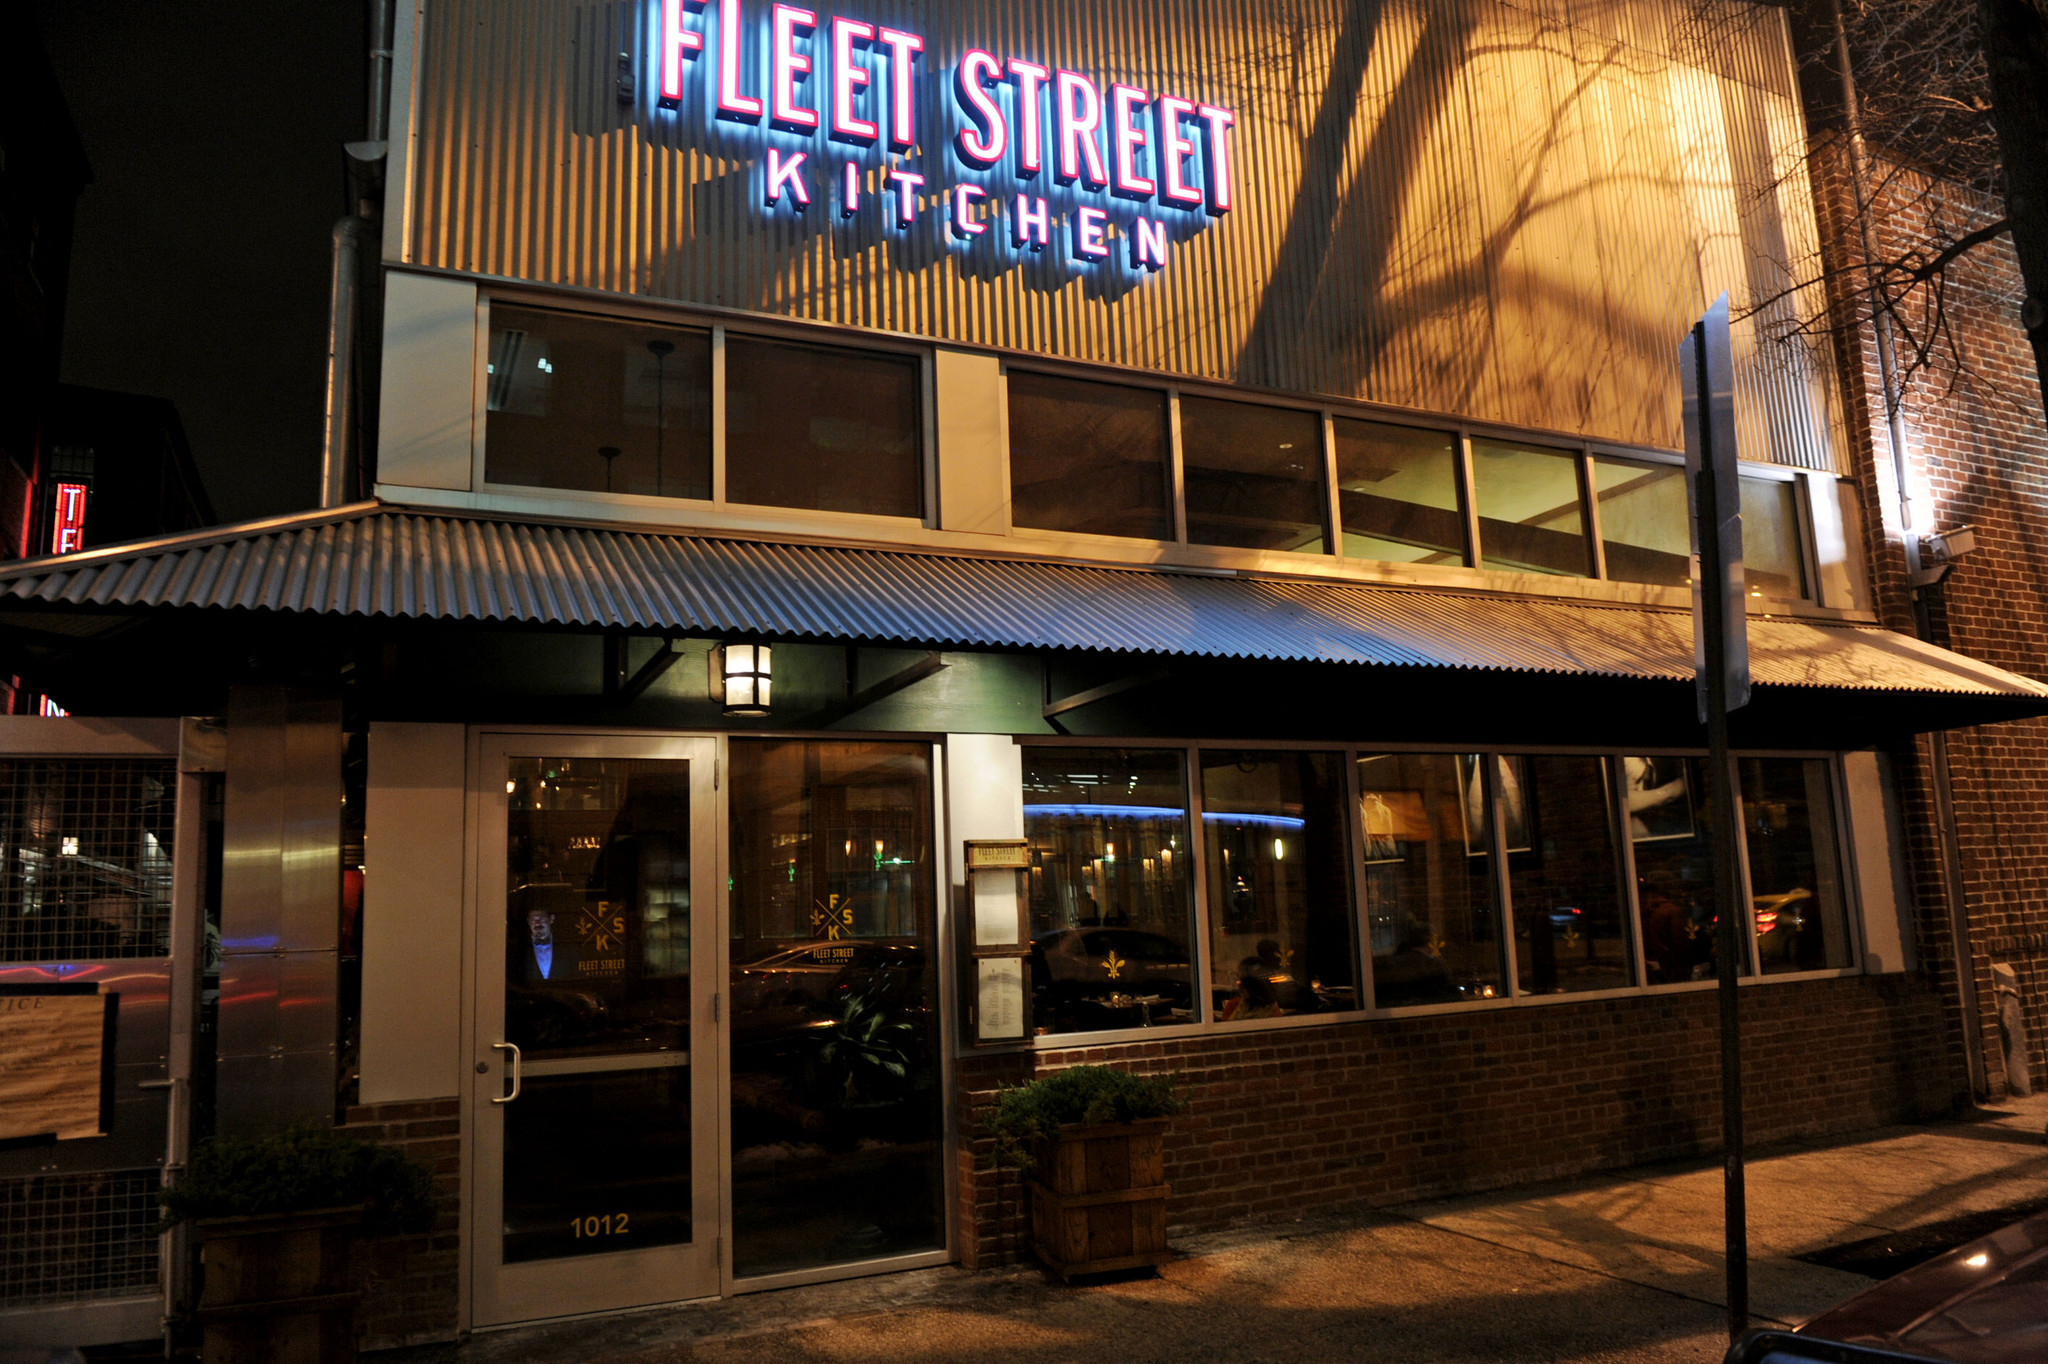 Atlas Restaurant Group To Take Over Rebrand Fleet Street Kitchen